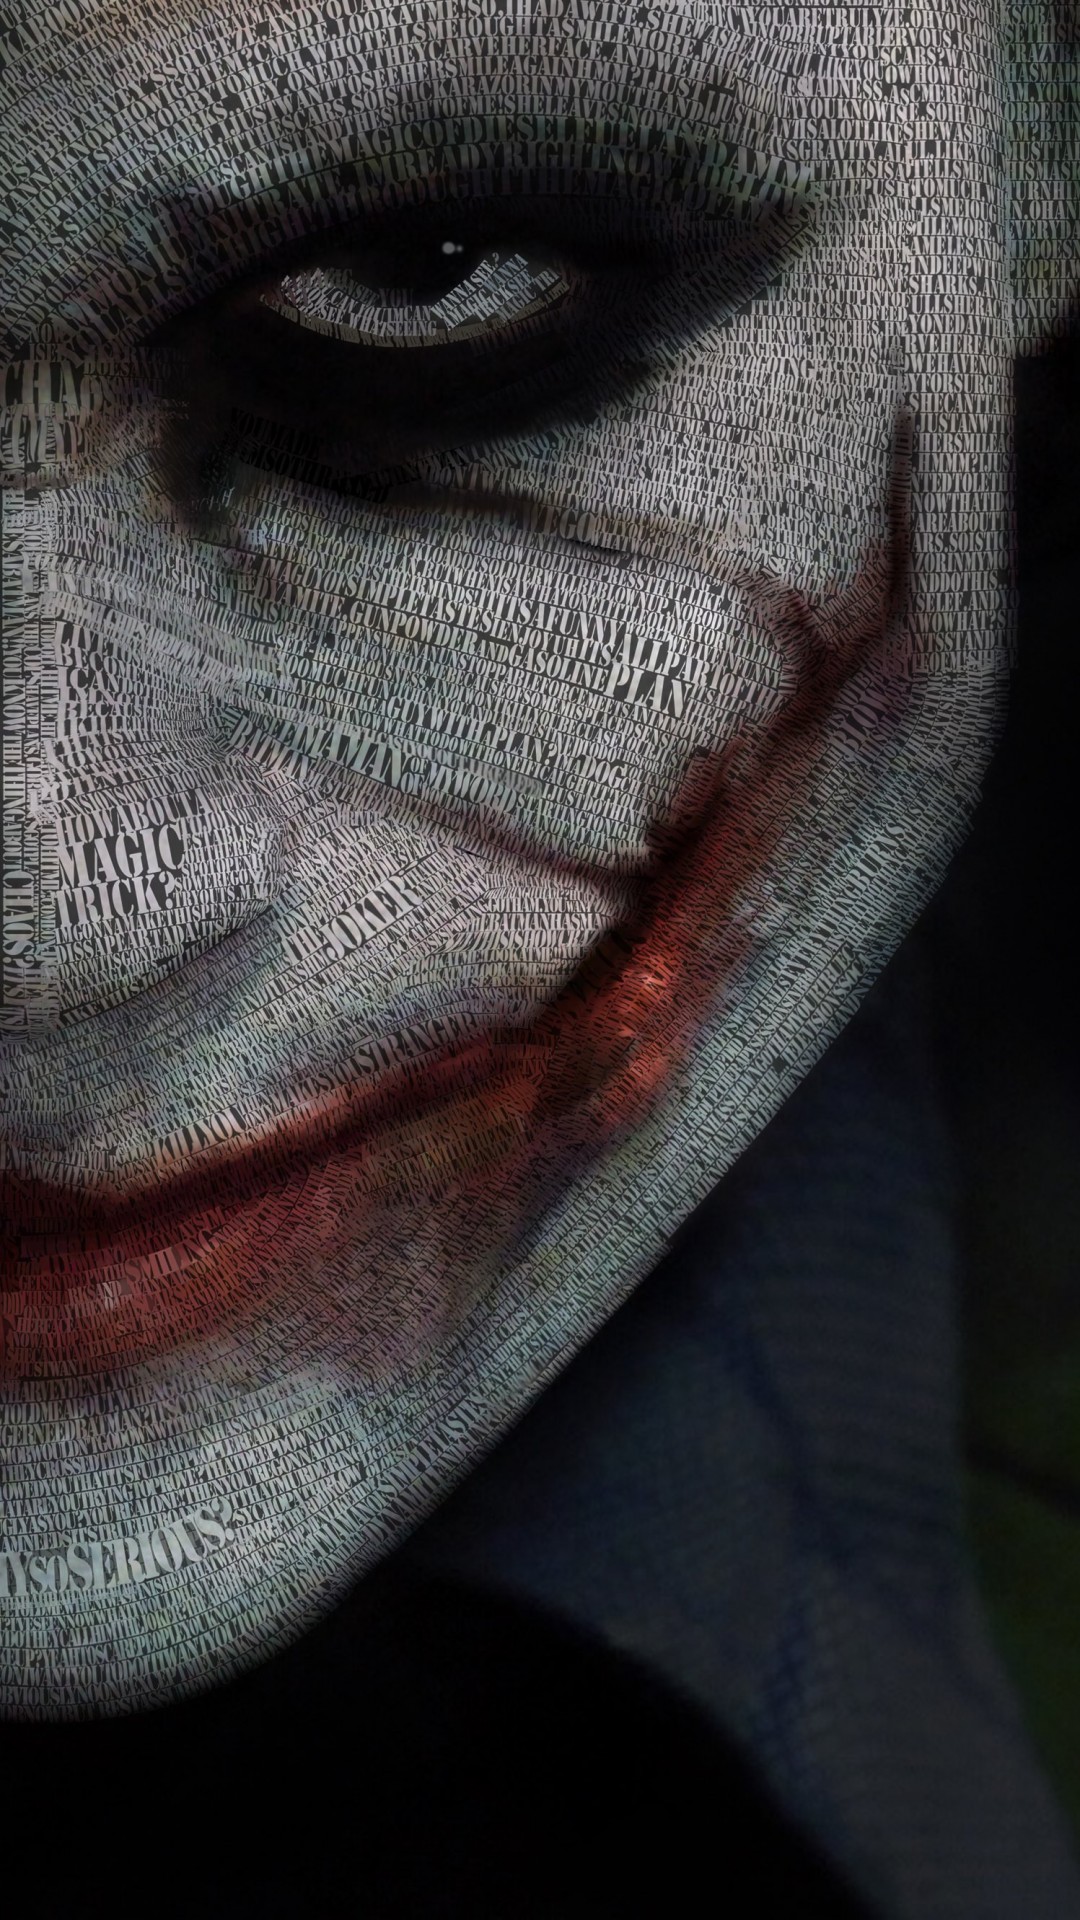 The Joker Typeface Portrait Wallpaper for Google Nexus 5X